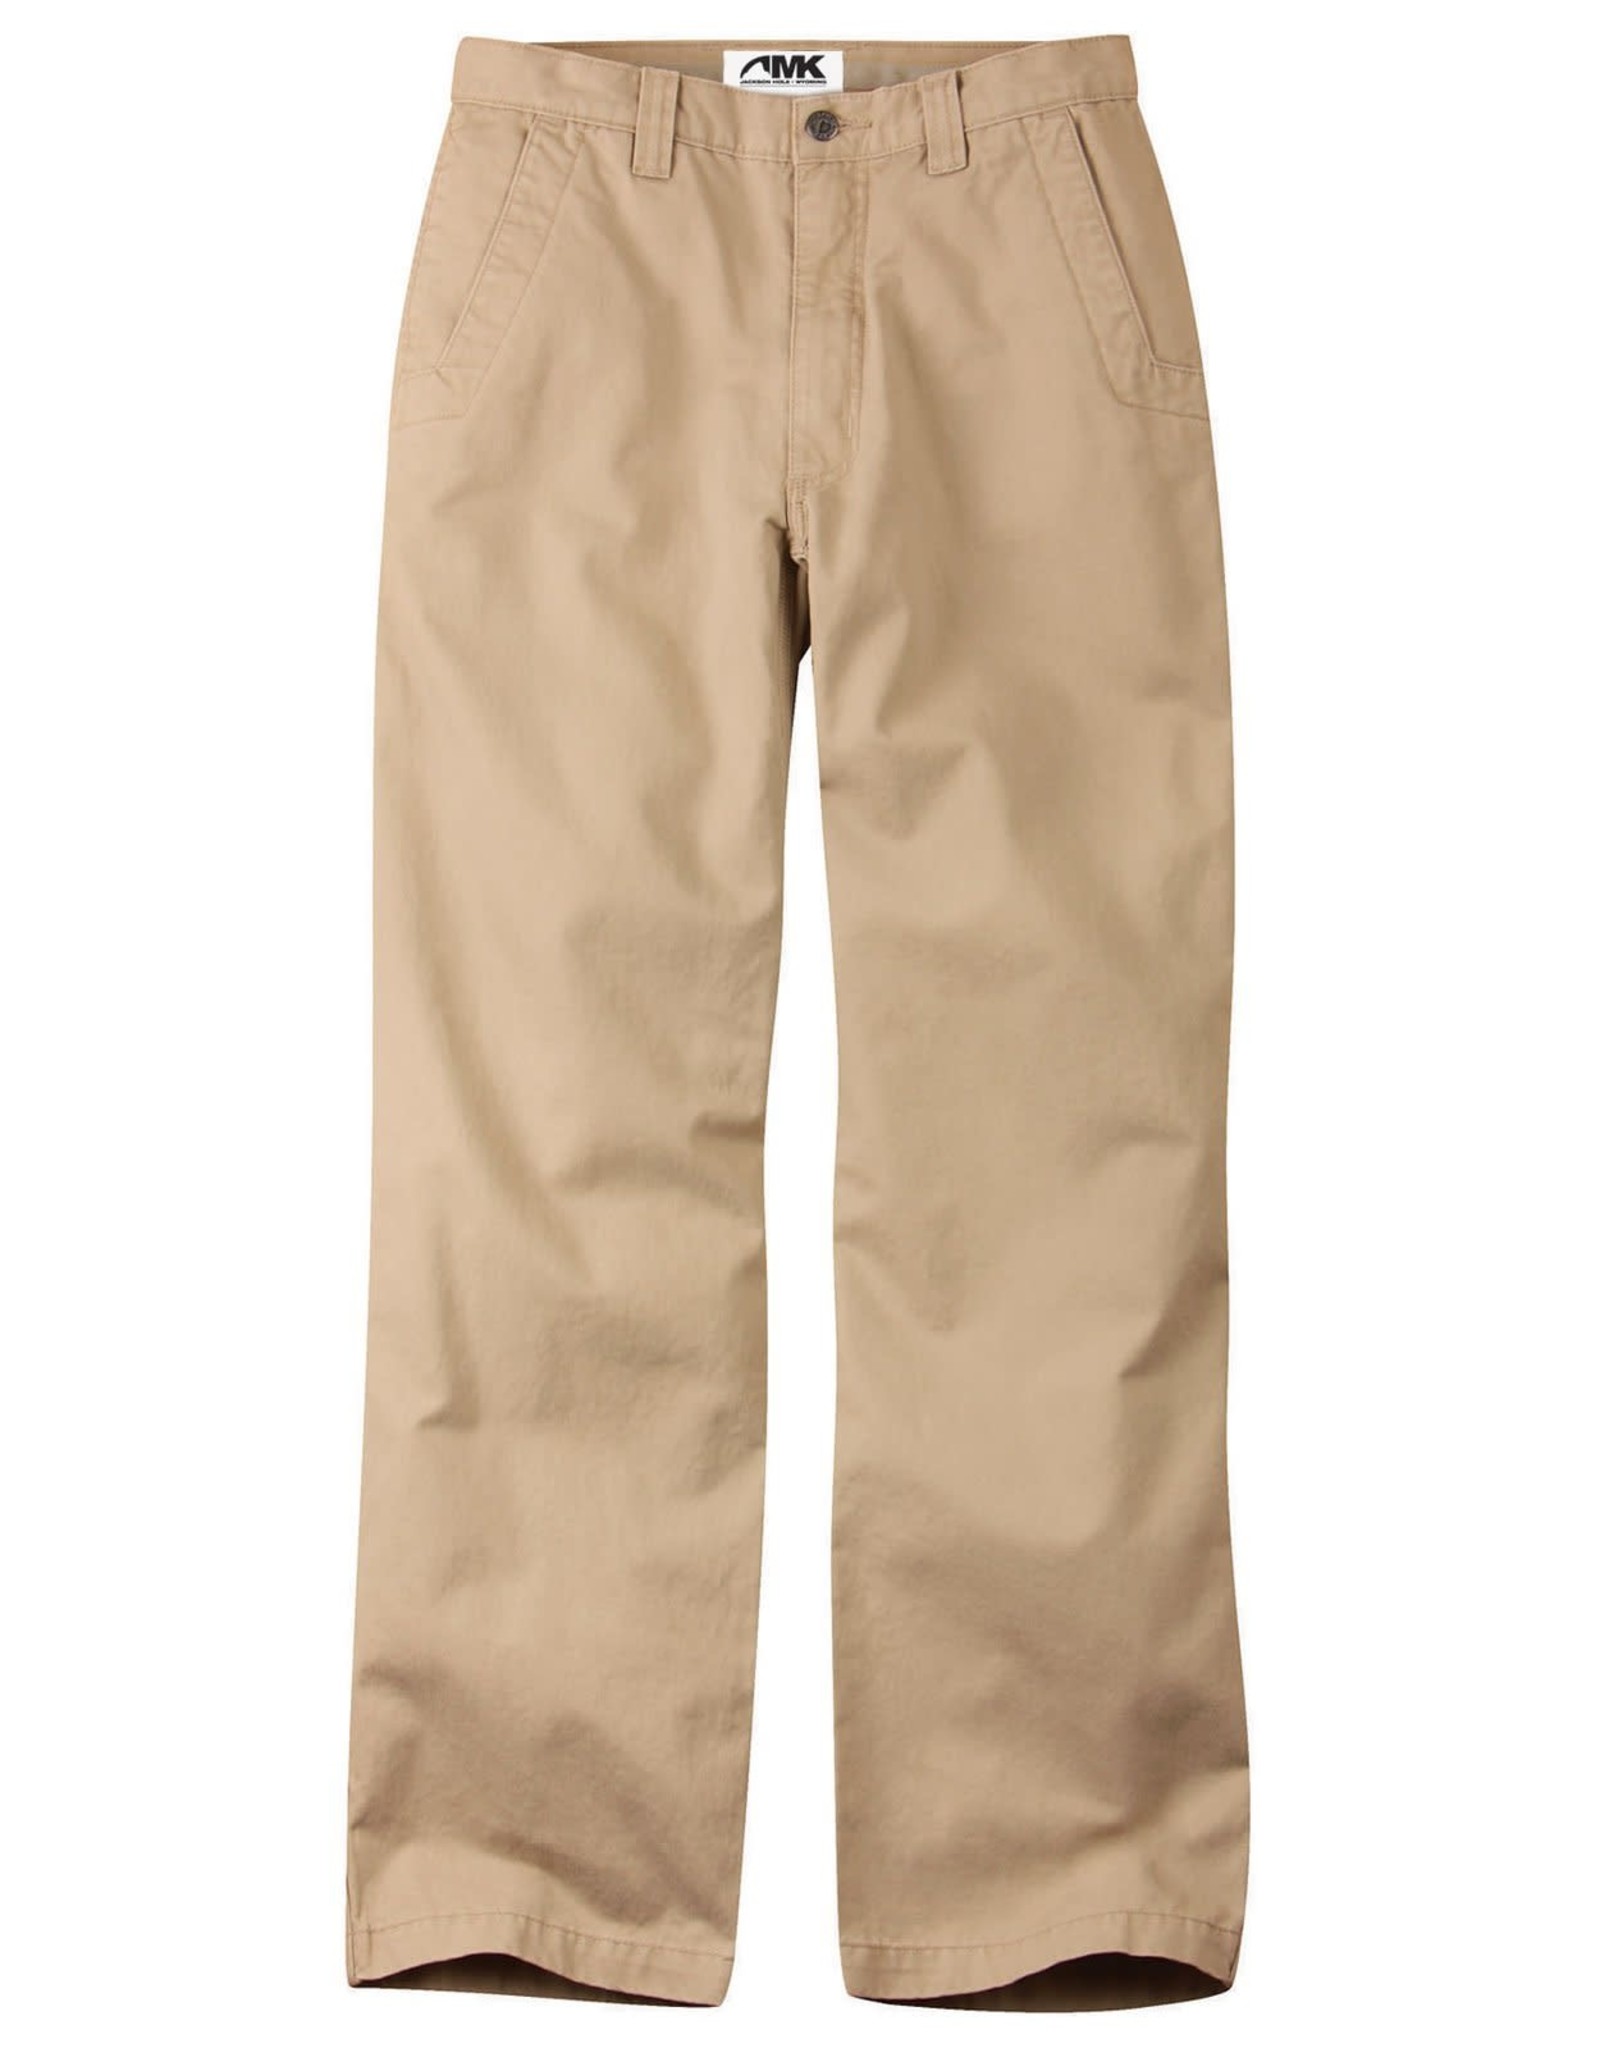 Mountain Khakis Men's Teton Twill Pant - Slim Fit